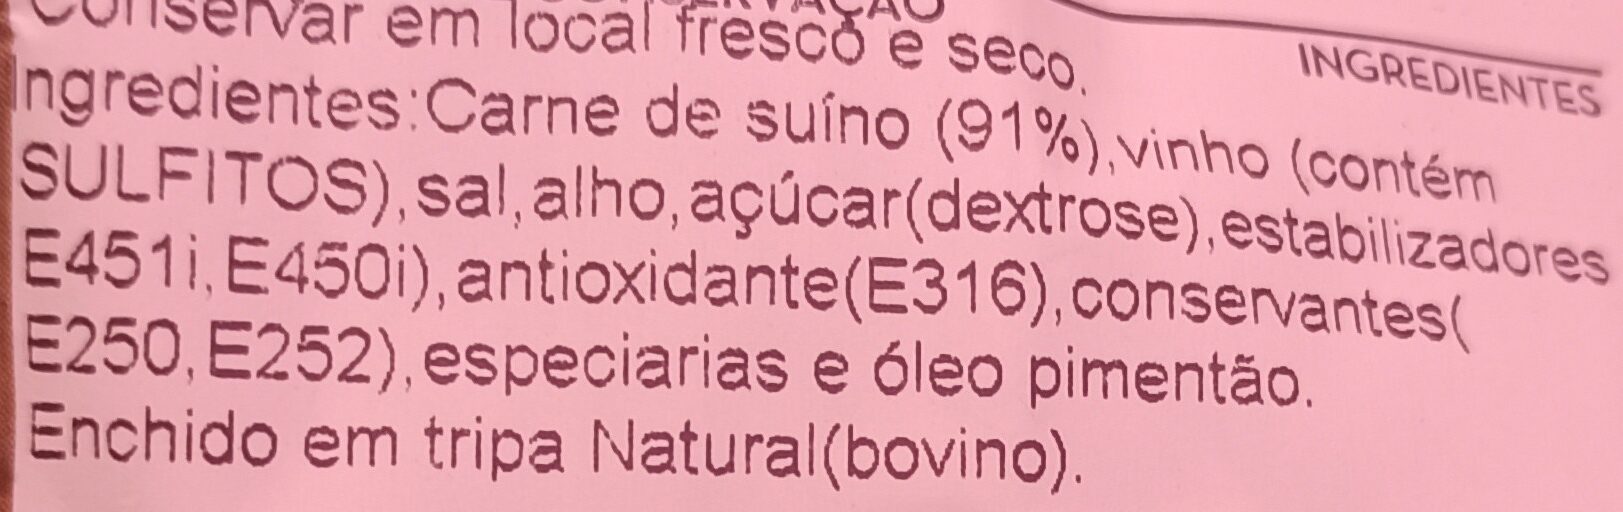 Chouriço Arganil - Ingredients - pt